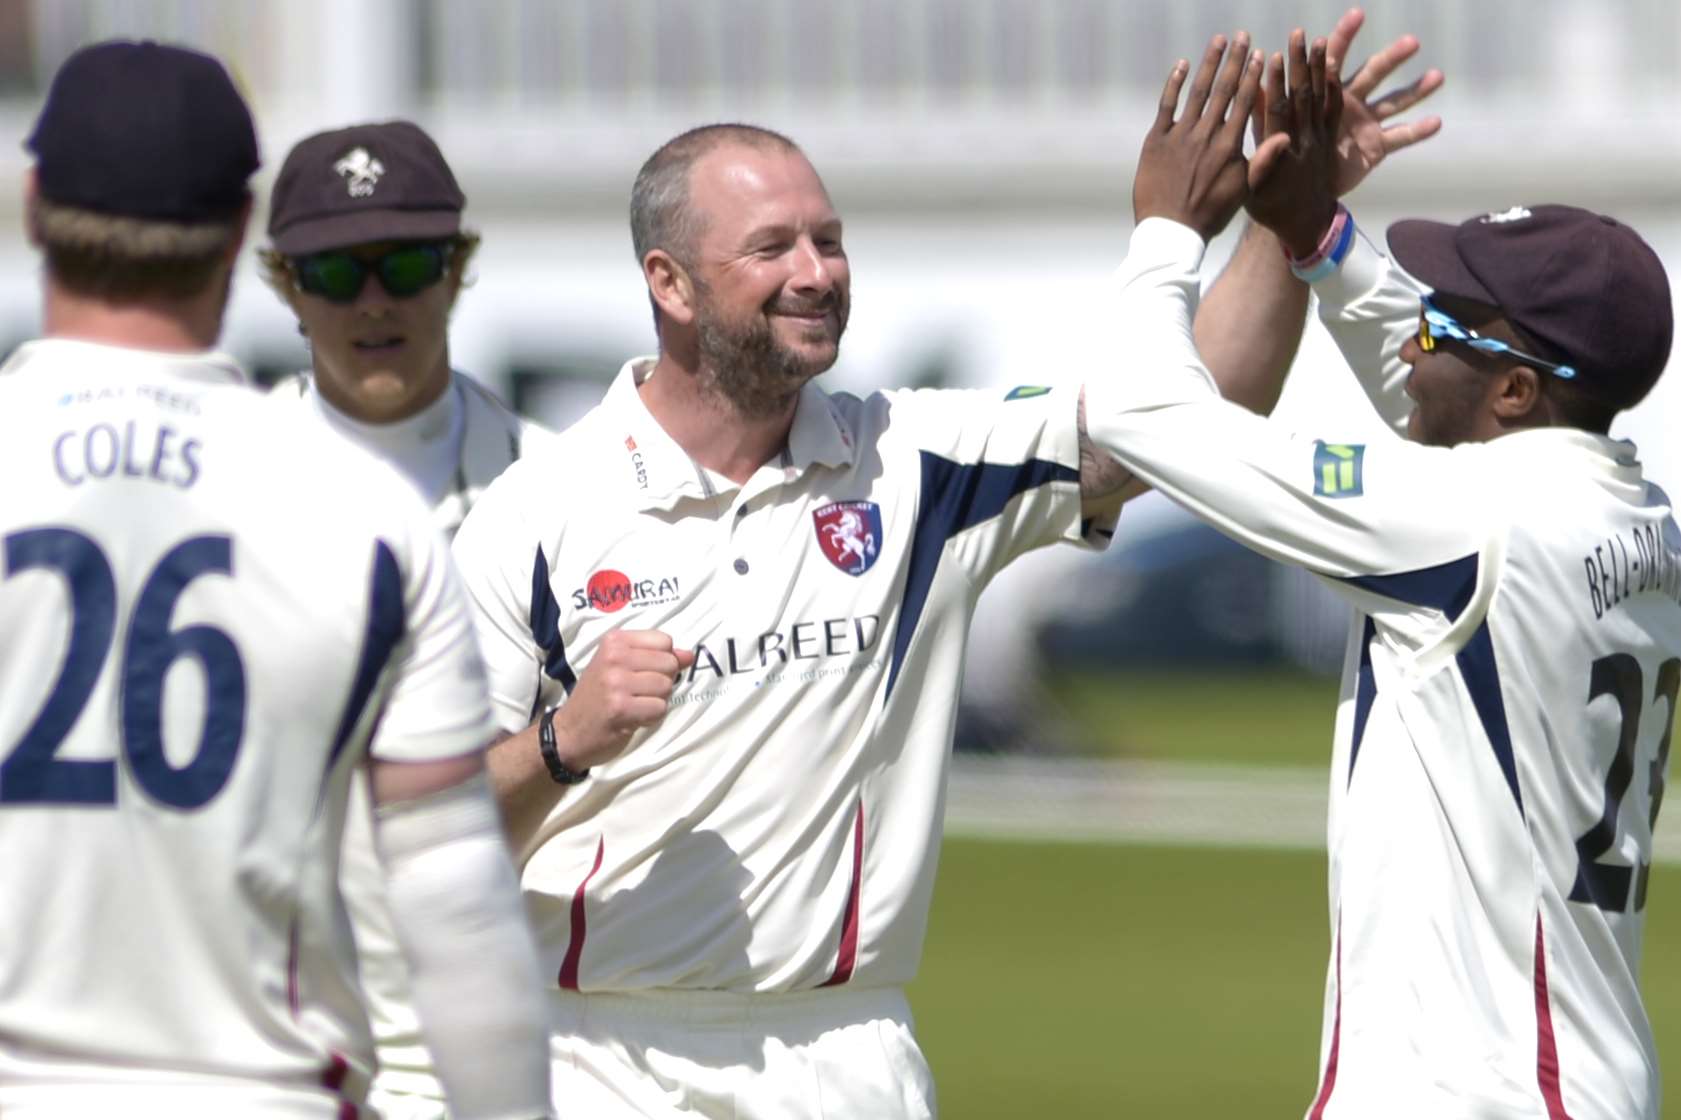 Darren Stevens celebrates a wicket earlier this season Picture: Barry Goodwin